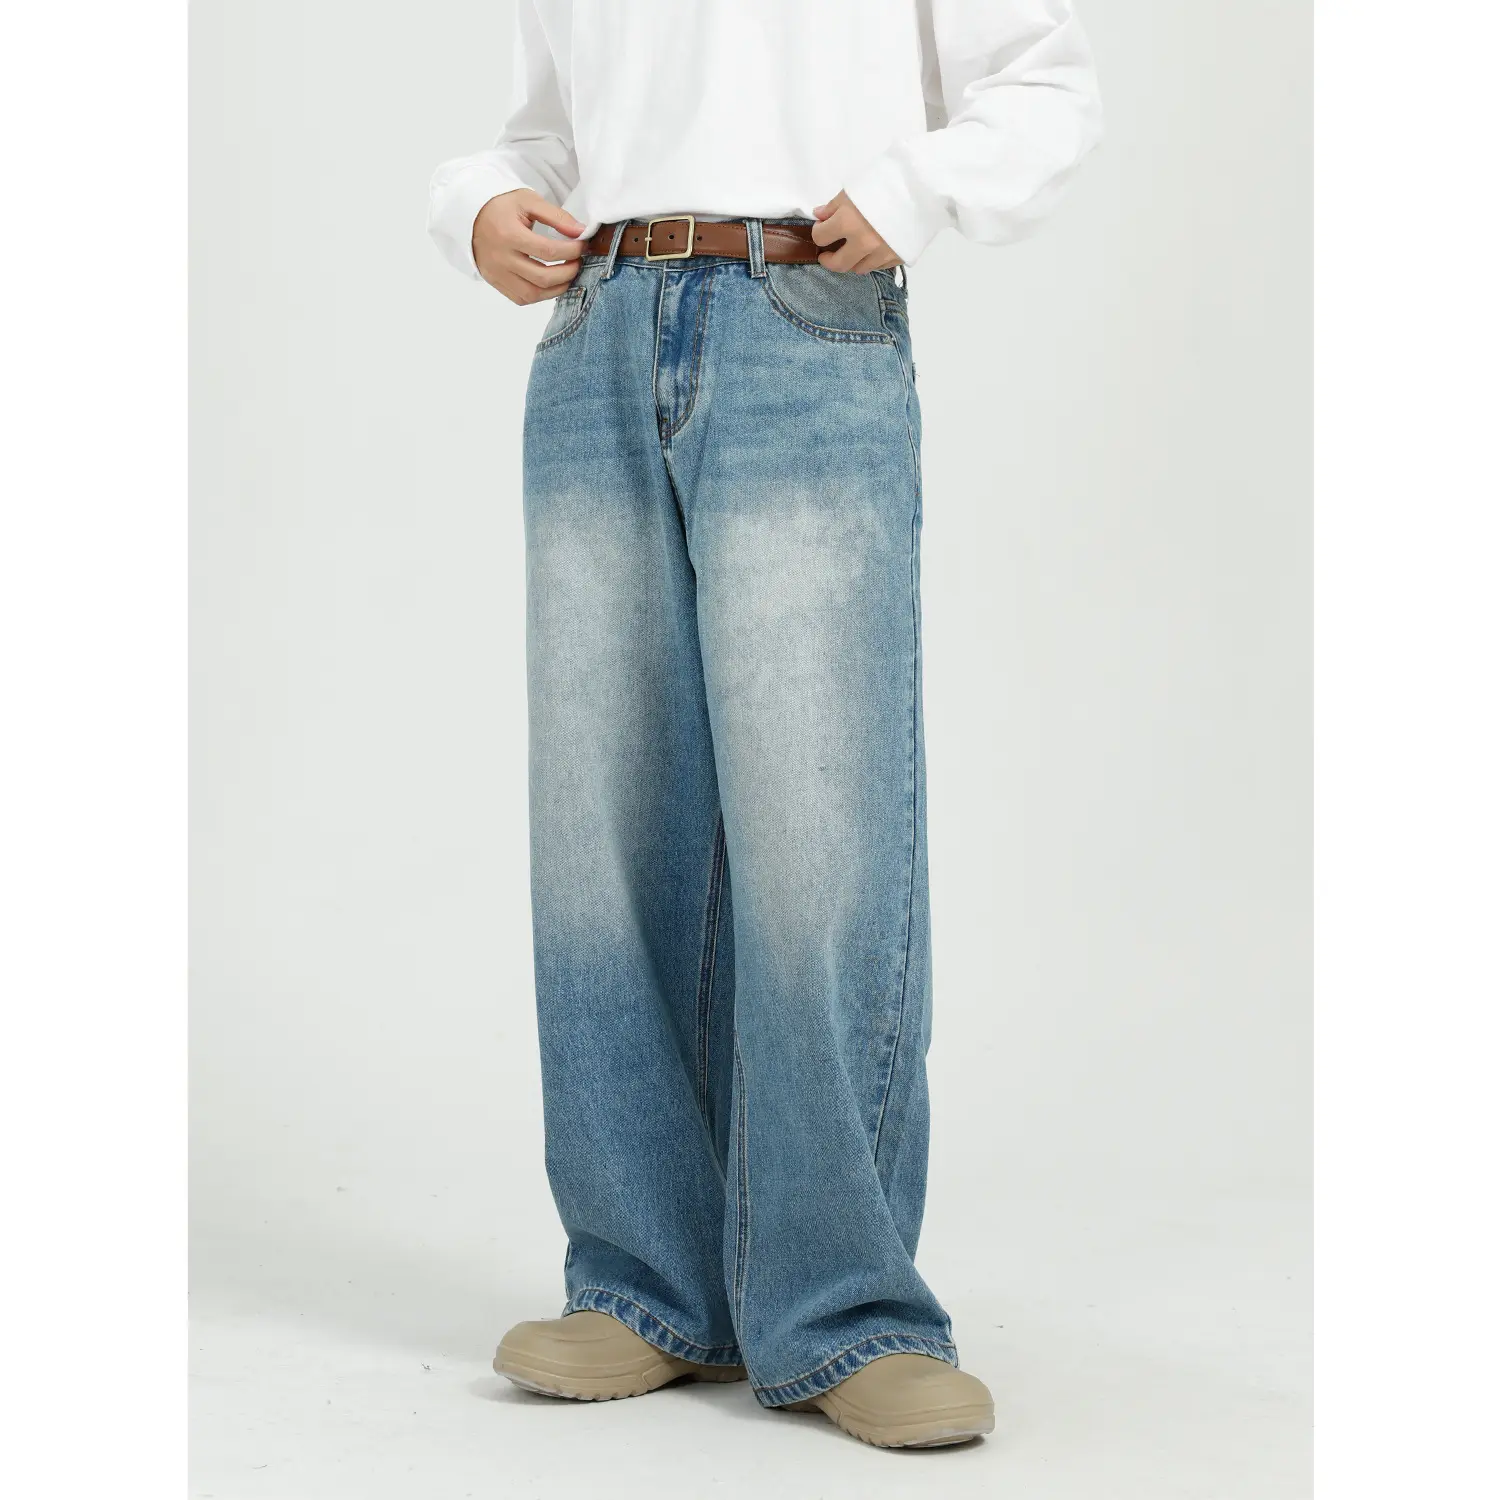 Kustom pria 100% katun 14 Oz Denim celana Baggy produsen Oem Streetwear Mens lebar kaki Jeans besar